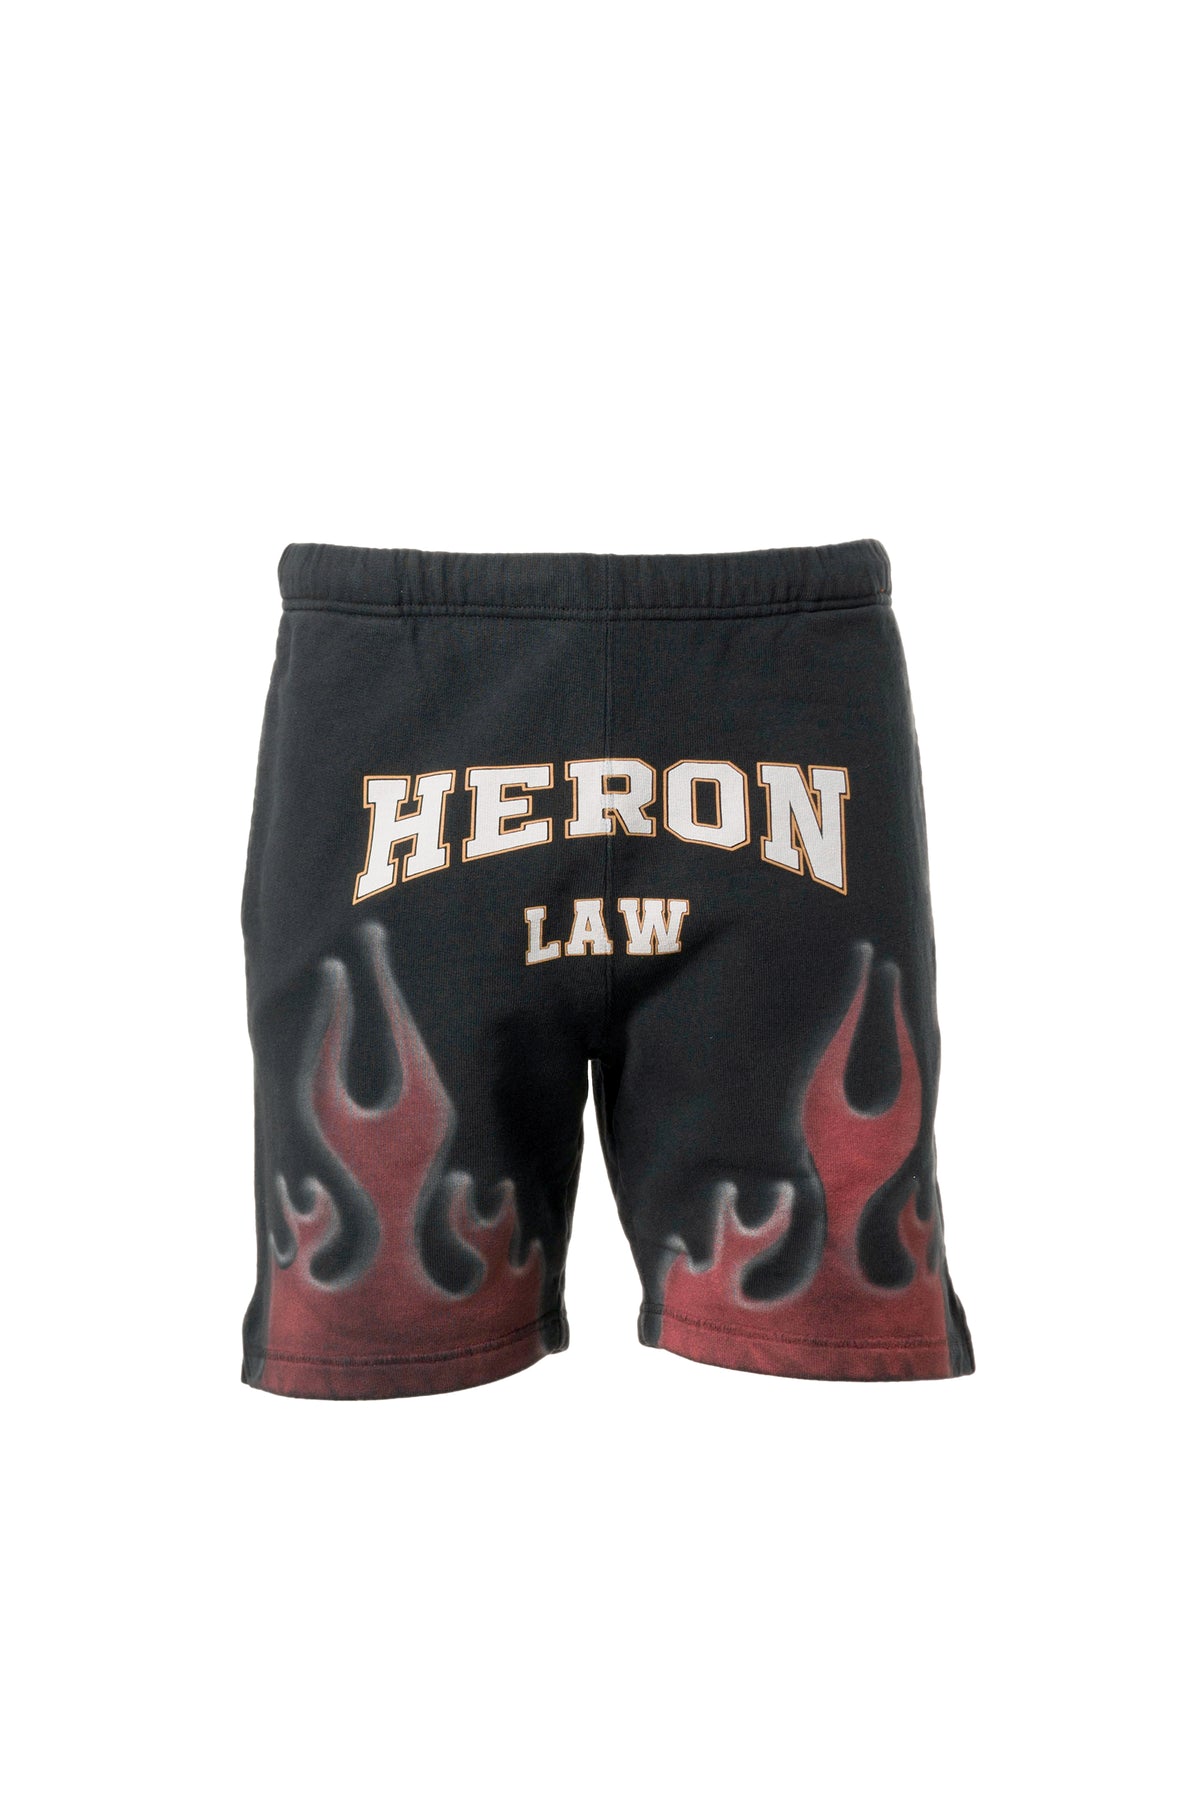 HERON LAW FLAMES SWEATSHORTS / BLK RED